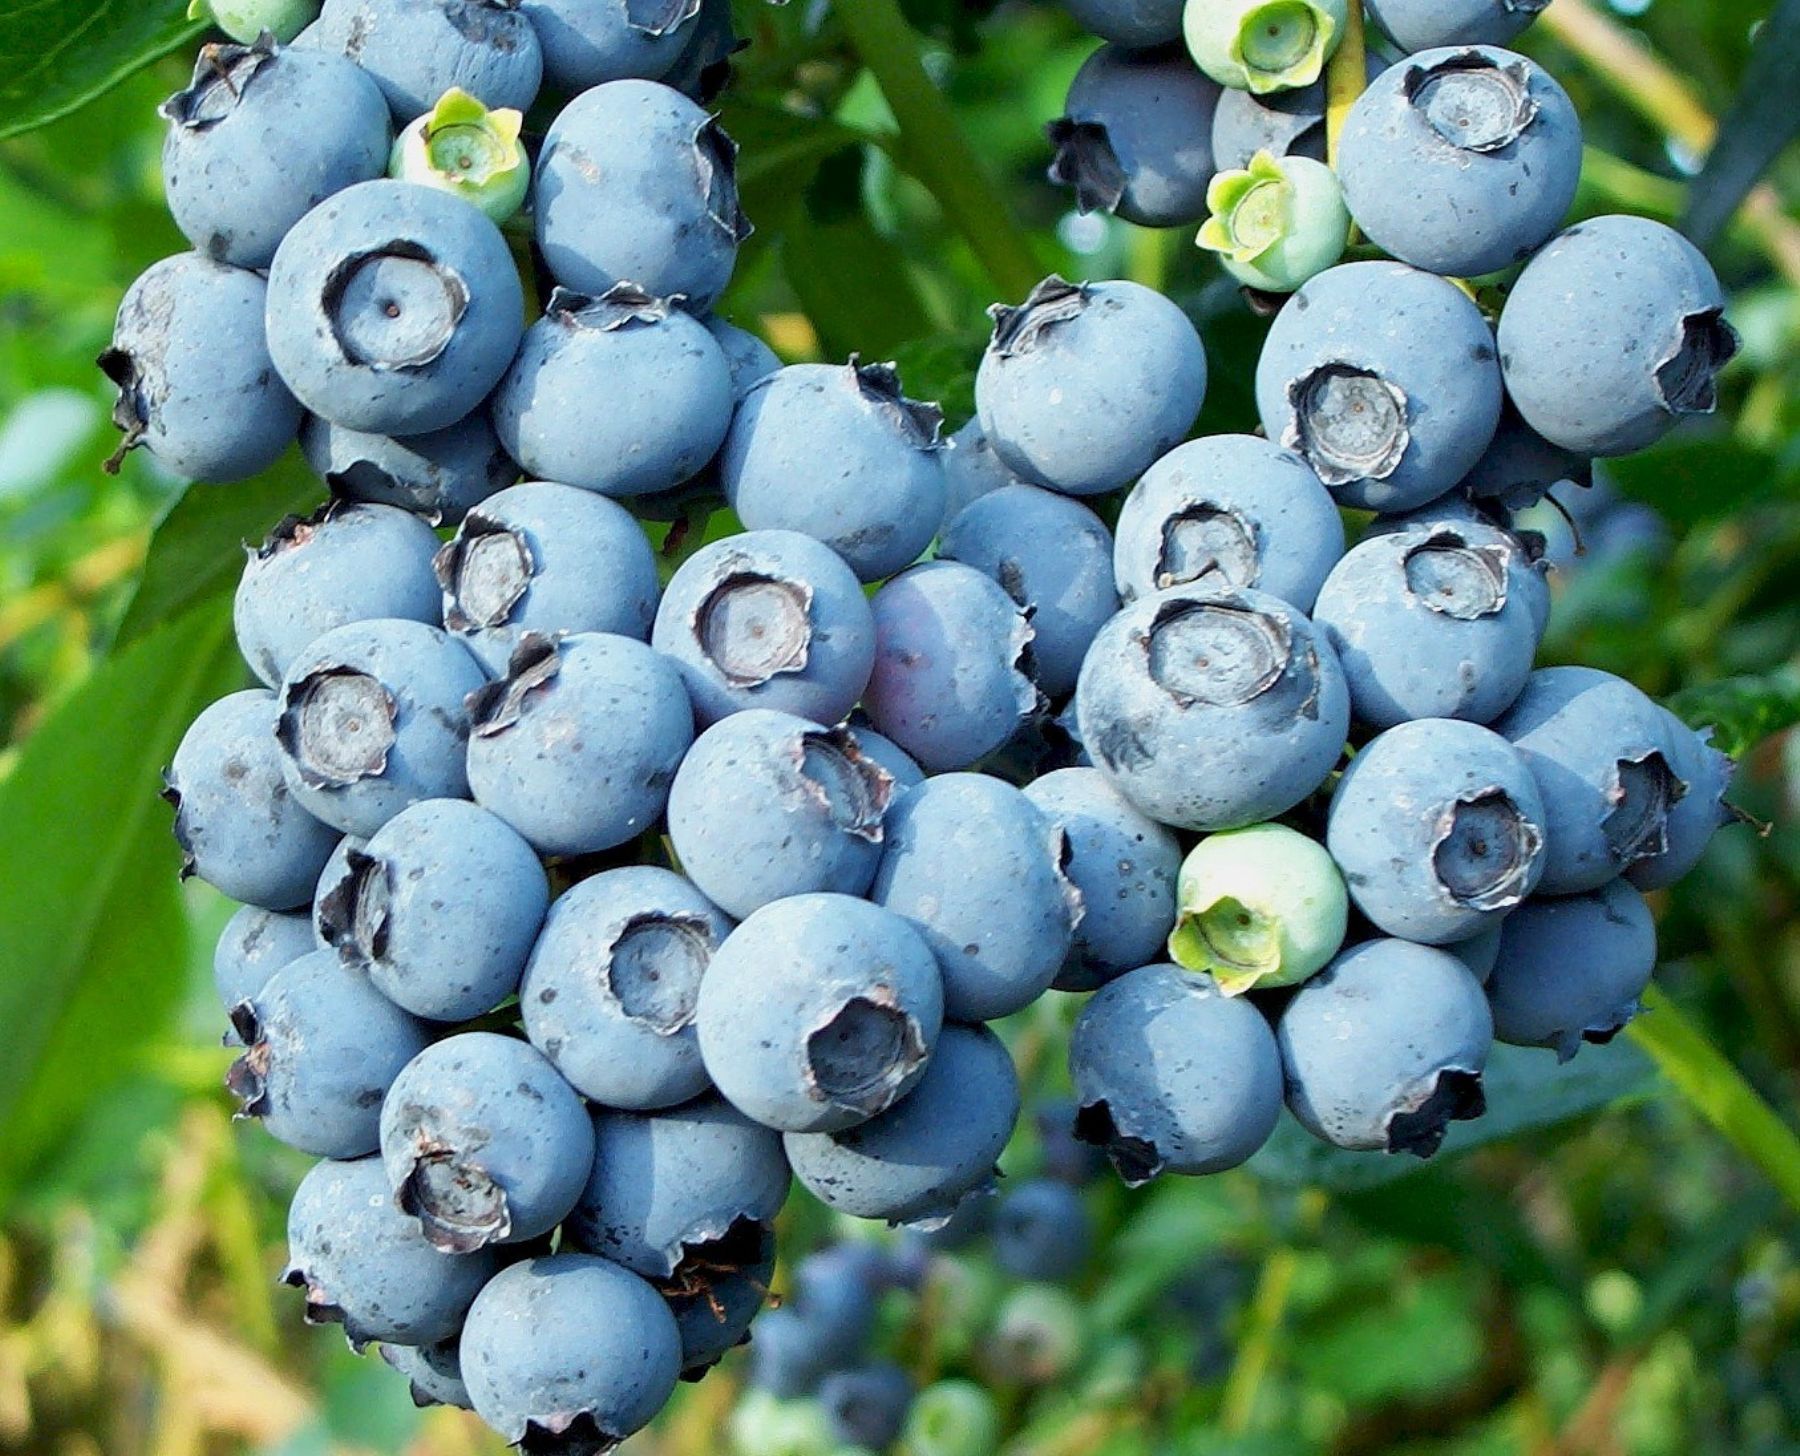 Peruvian blueberry